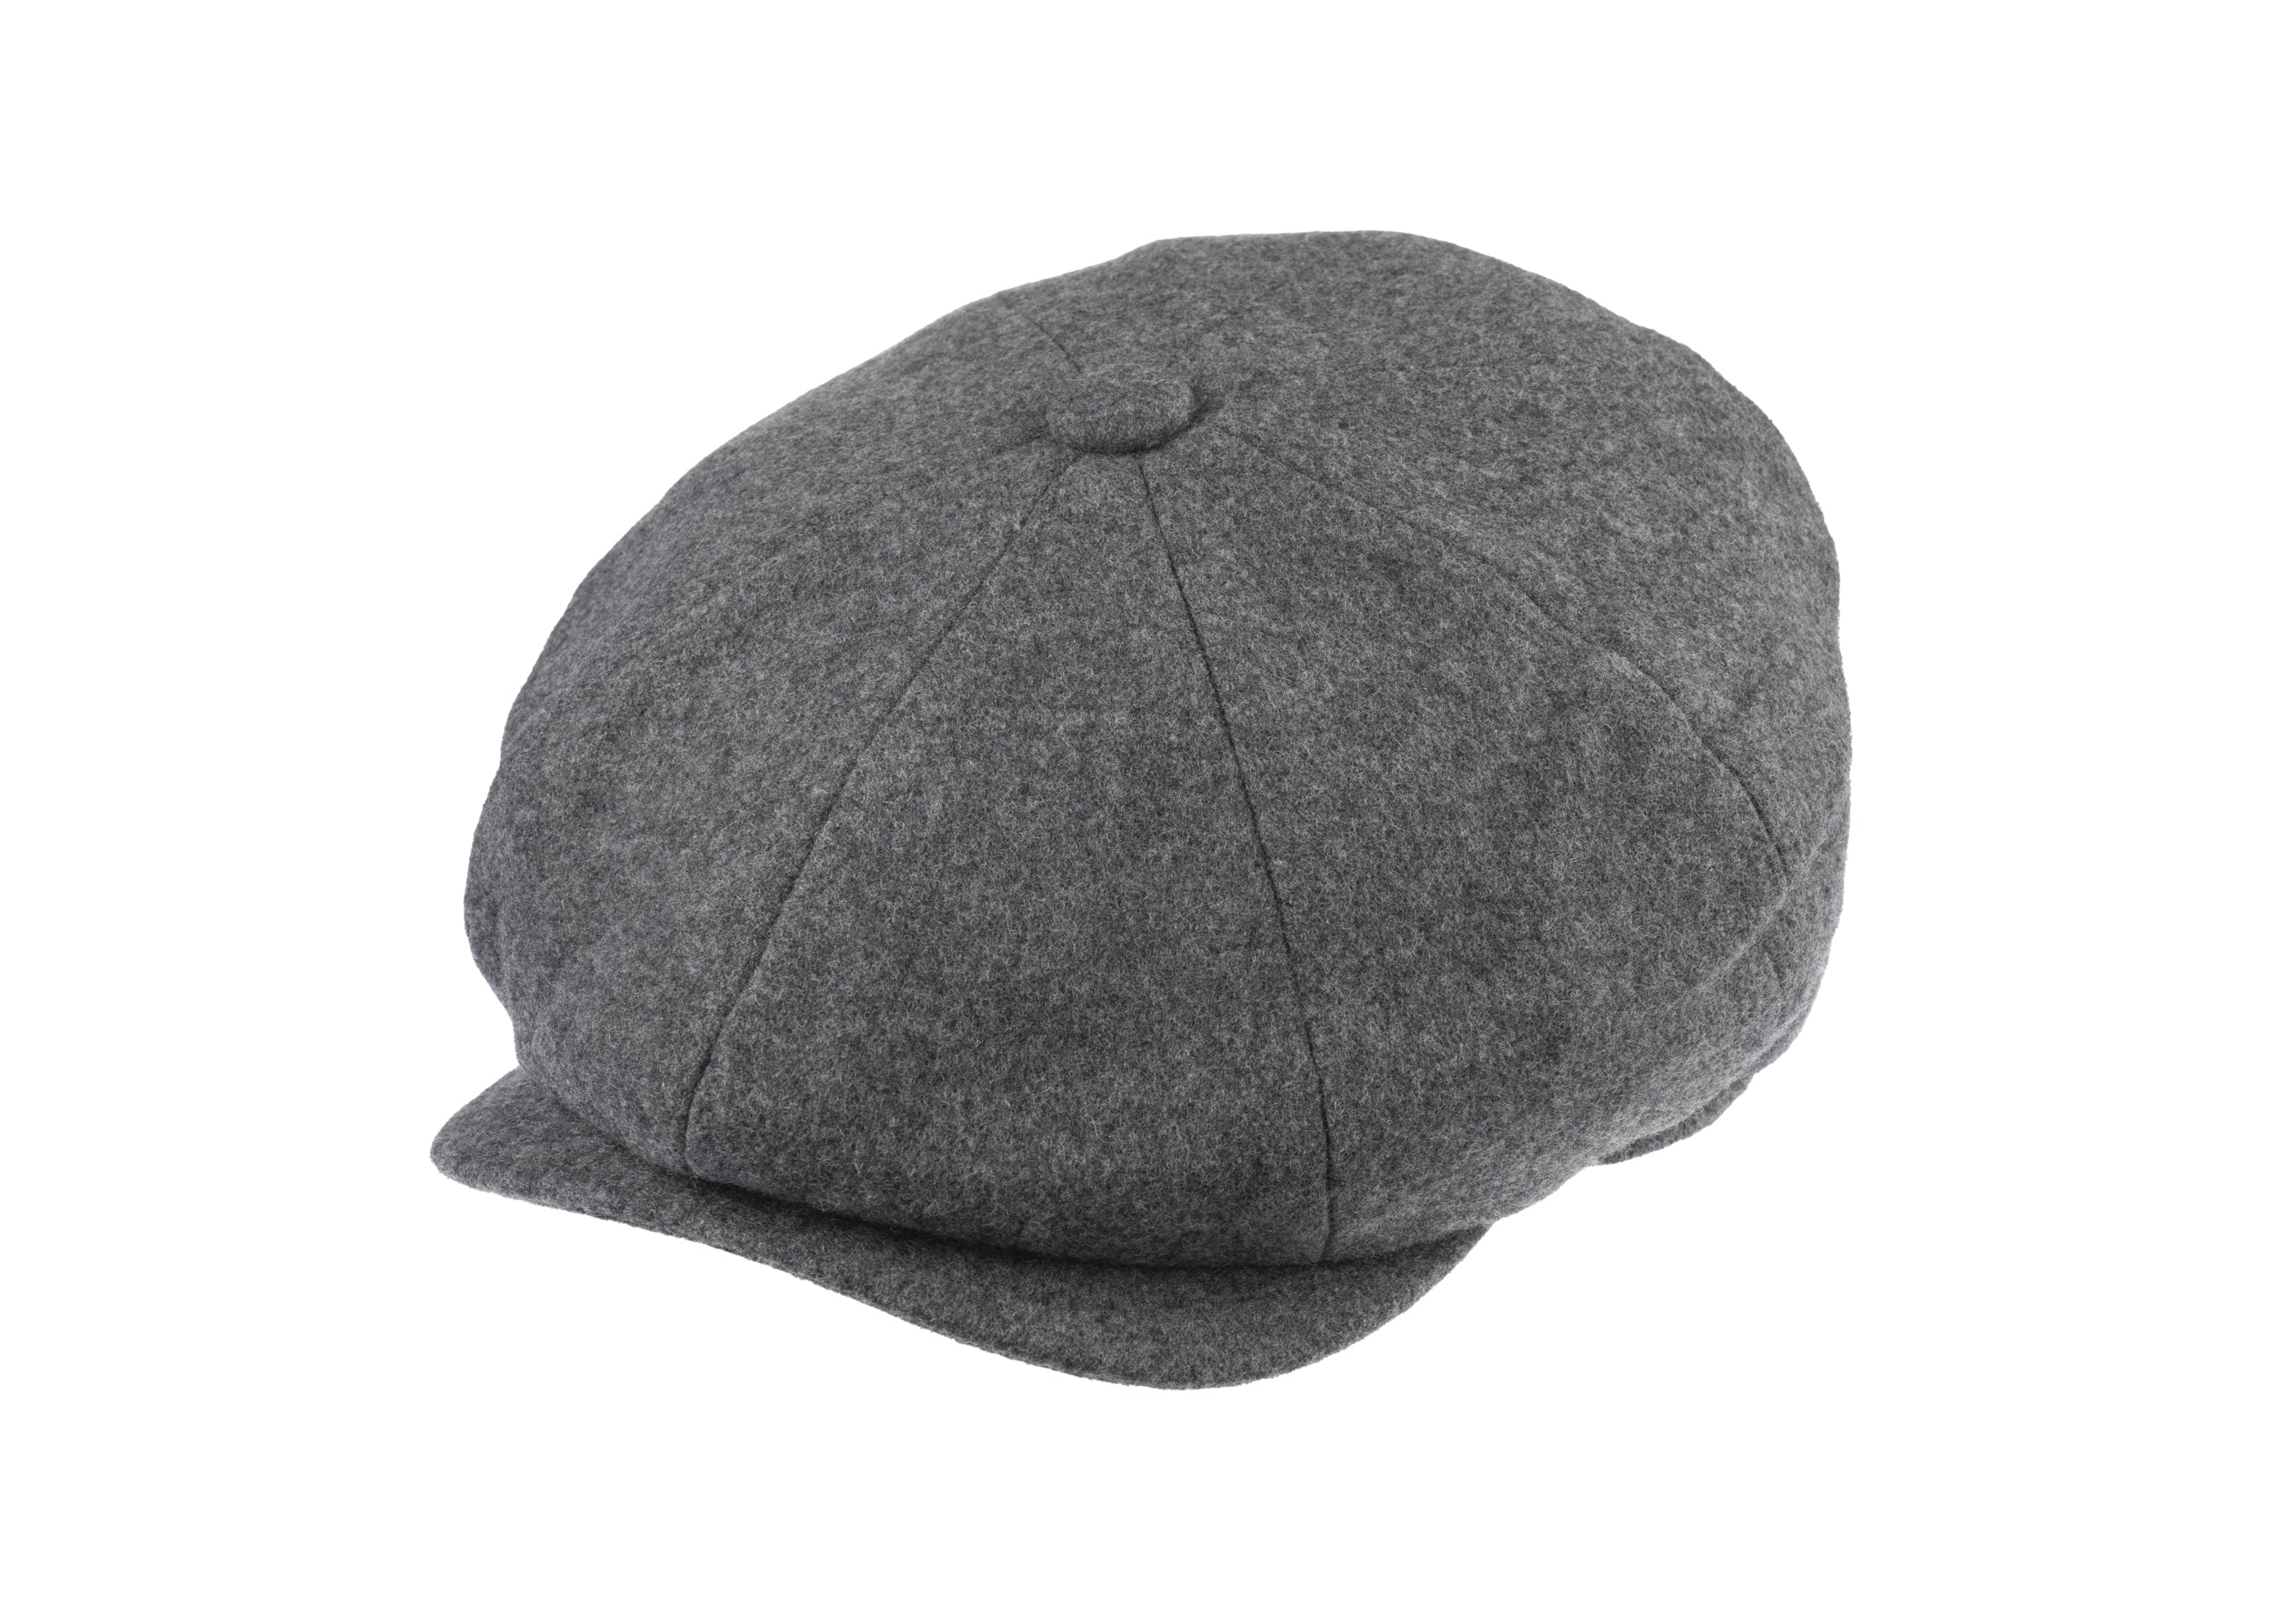 Josh 8 piece baker boy cap in cashmere/wool blend fabric in Grey